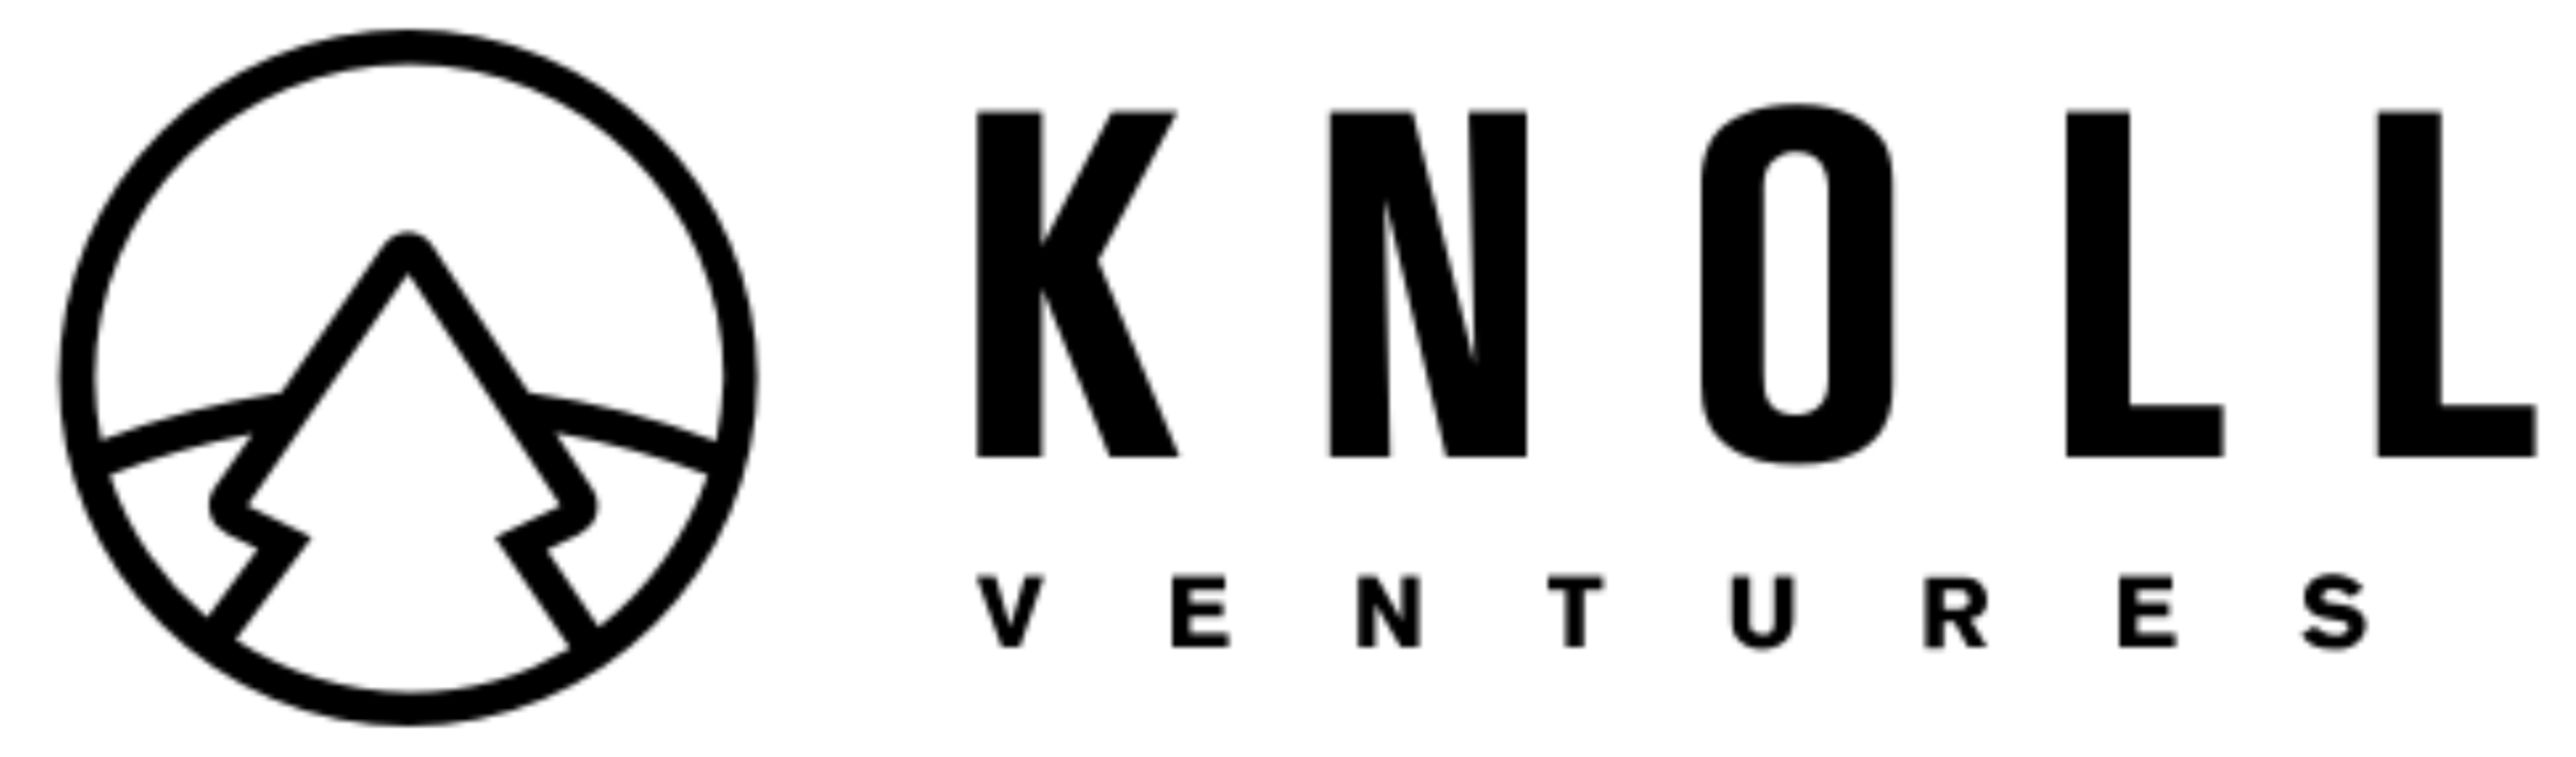 knoll ventures logo